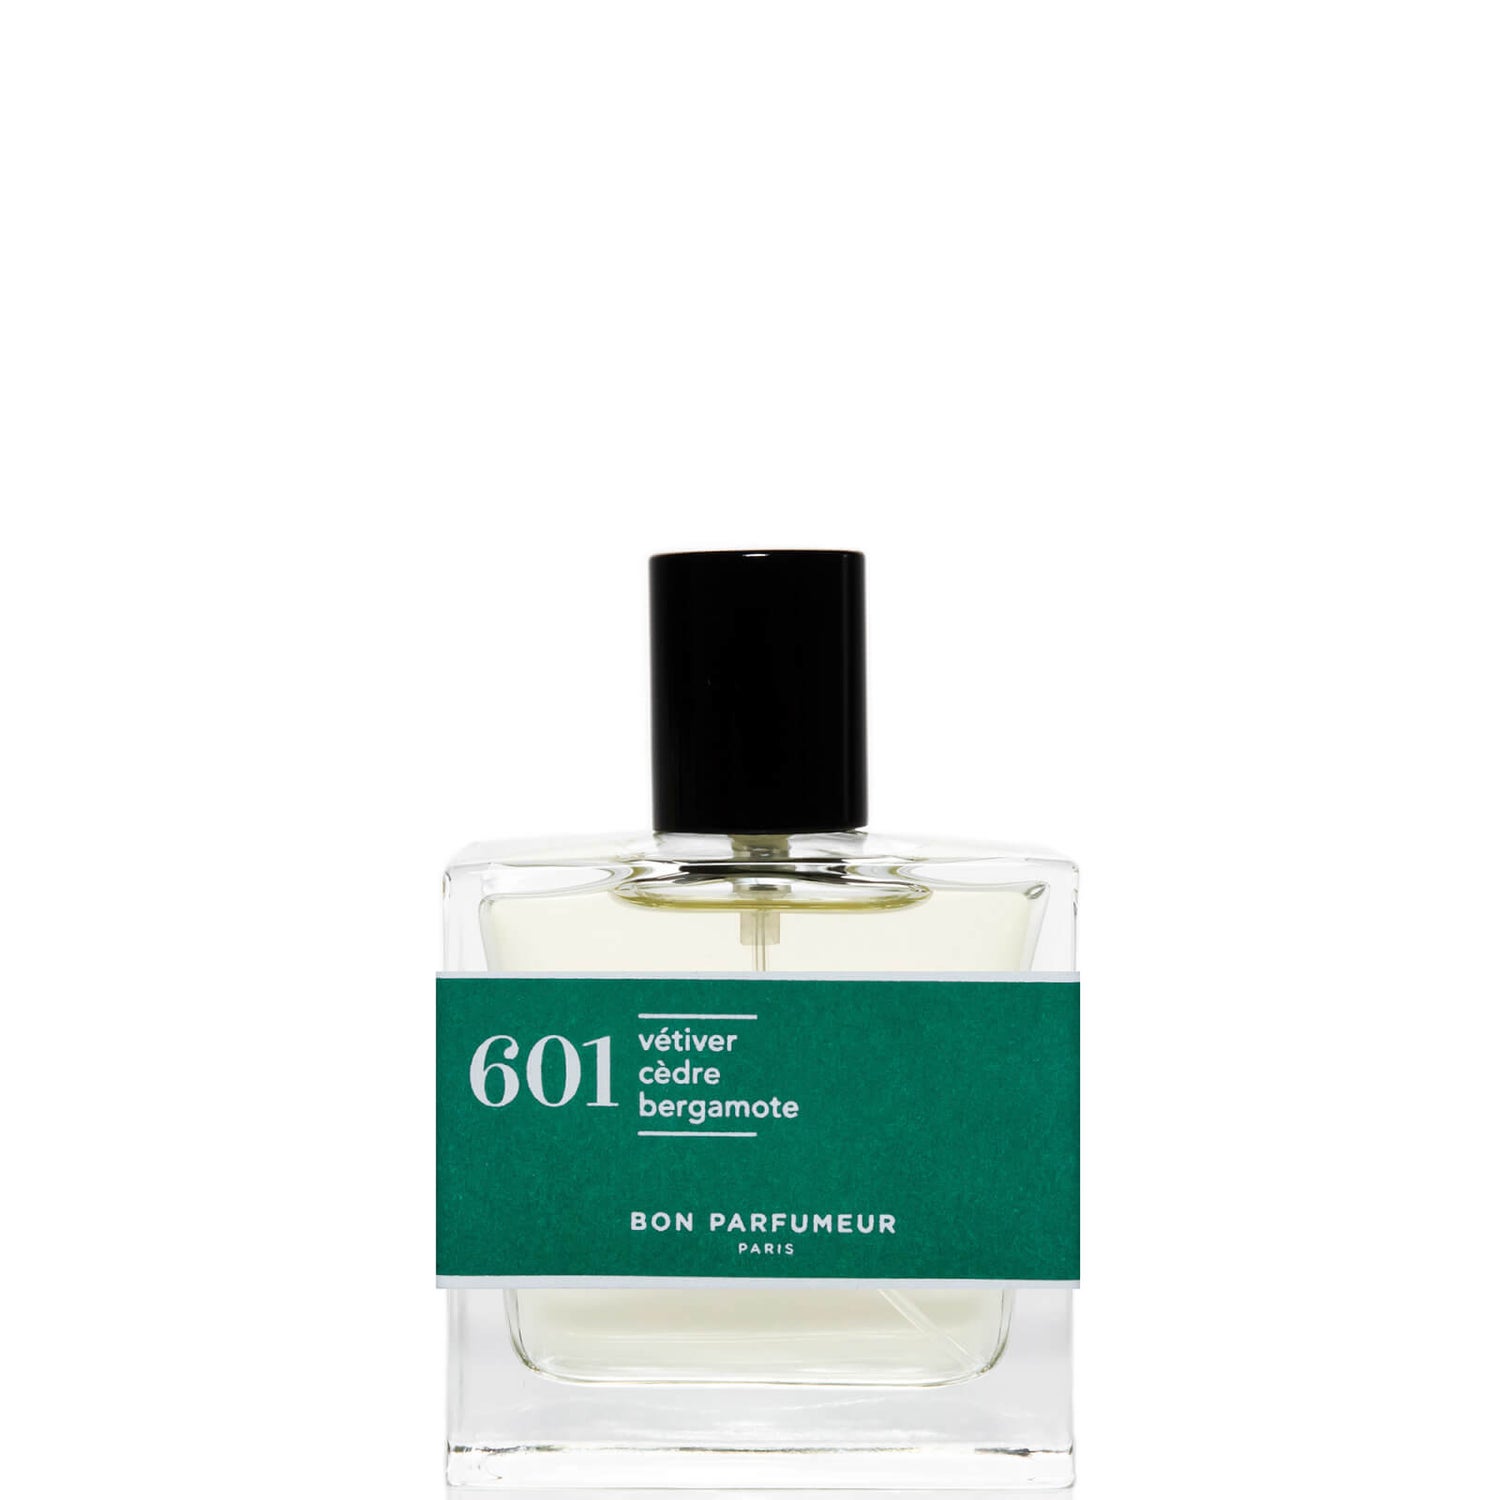 Bon Parfumeur 601 Agua de perfume Vetiver Cedro Bergamota - 30ml